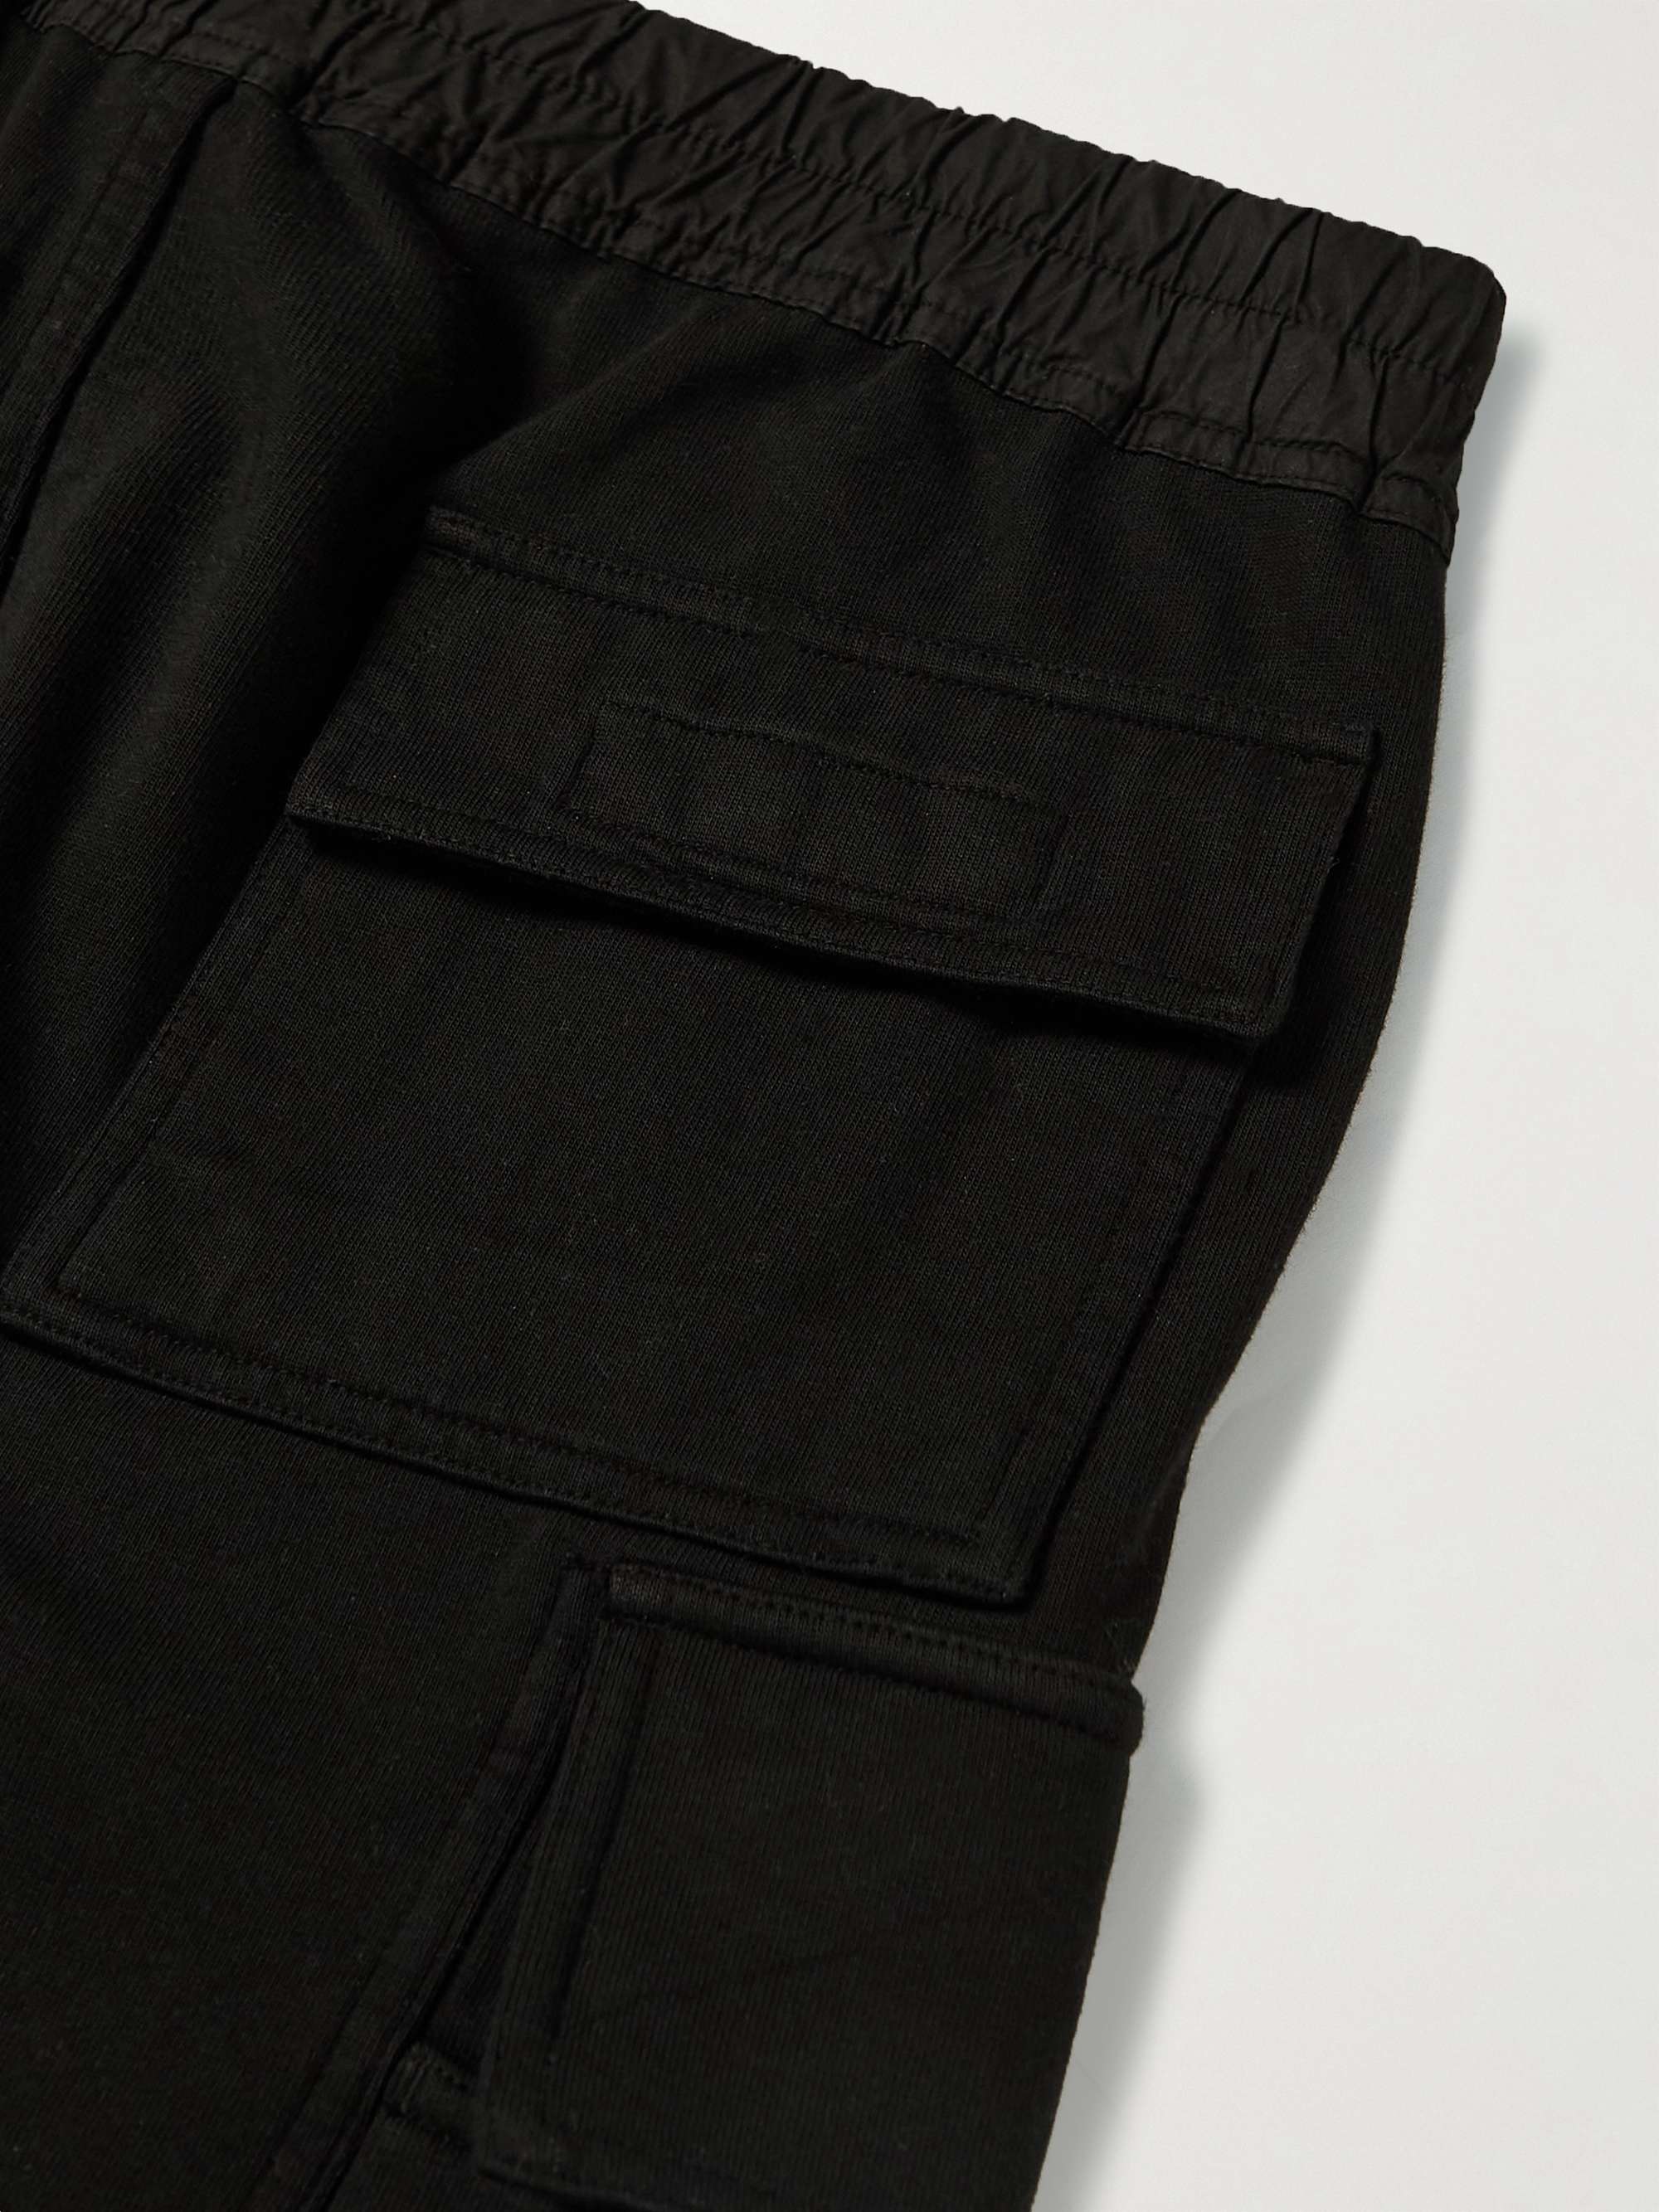 DRKSHDW BY RICK OWENS Mastodon Slim-Fit Tapered Cotton-Jersey Cargo Sweatpants